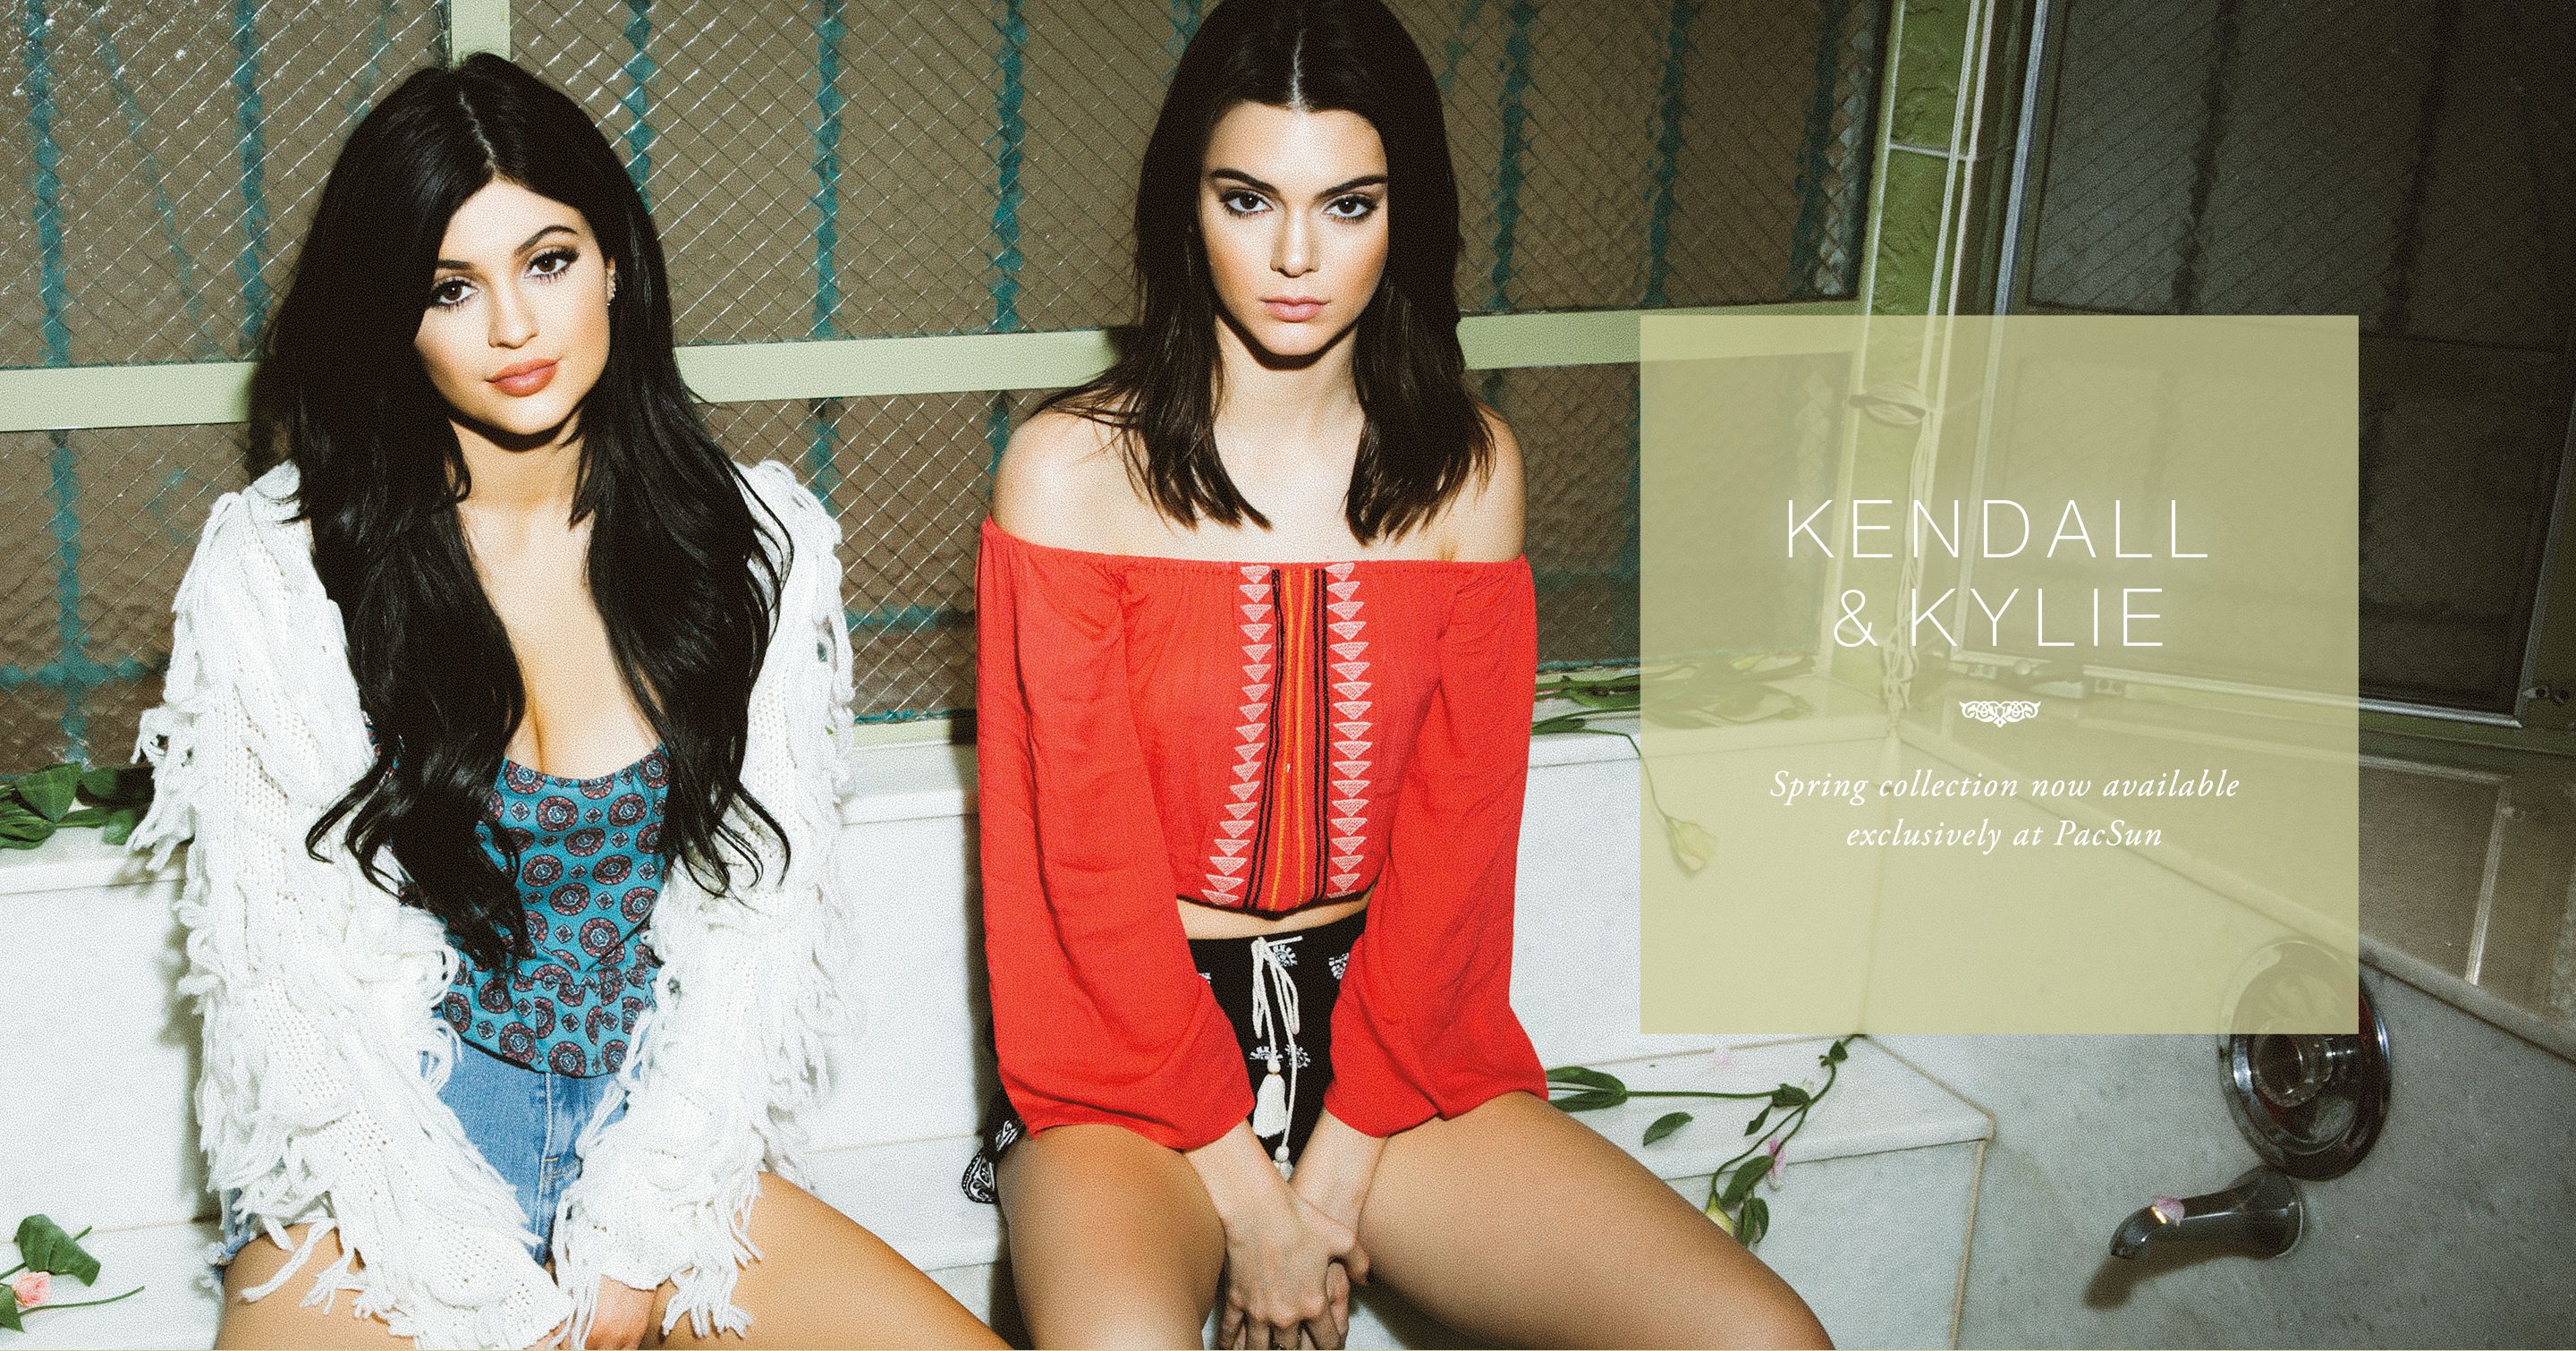 Kendall Jenner Celebrities Skinny Gossip Forums